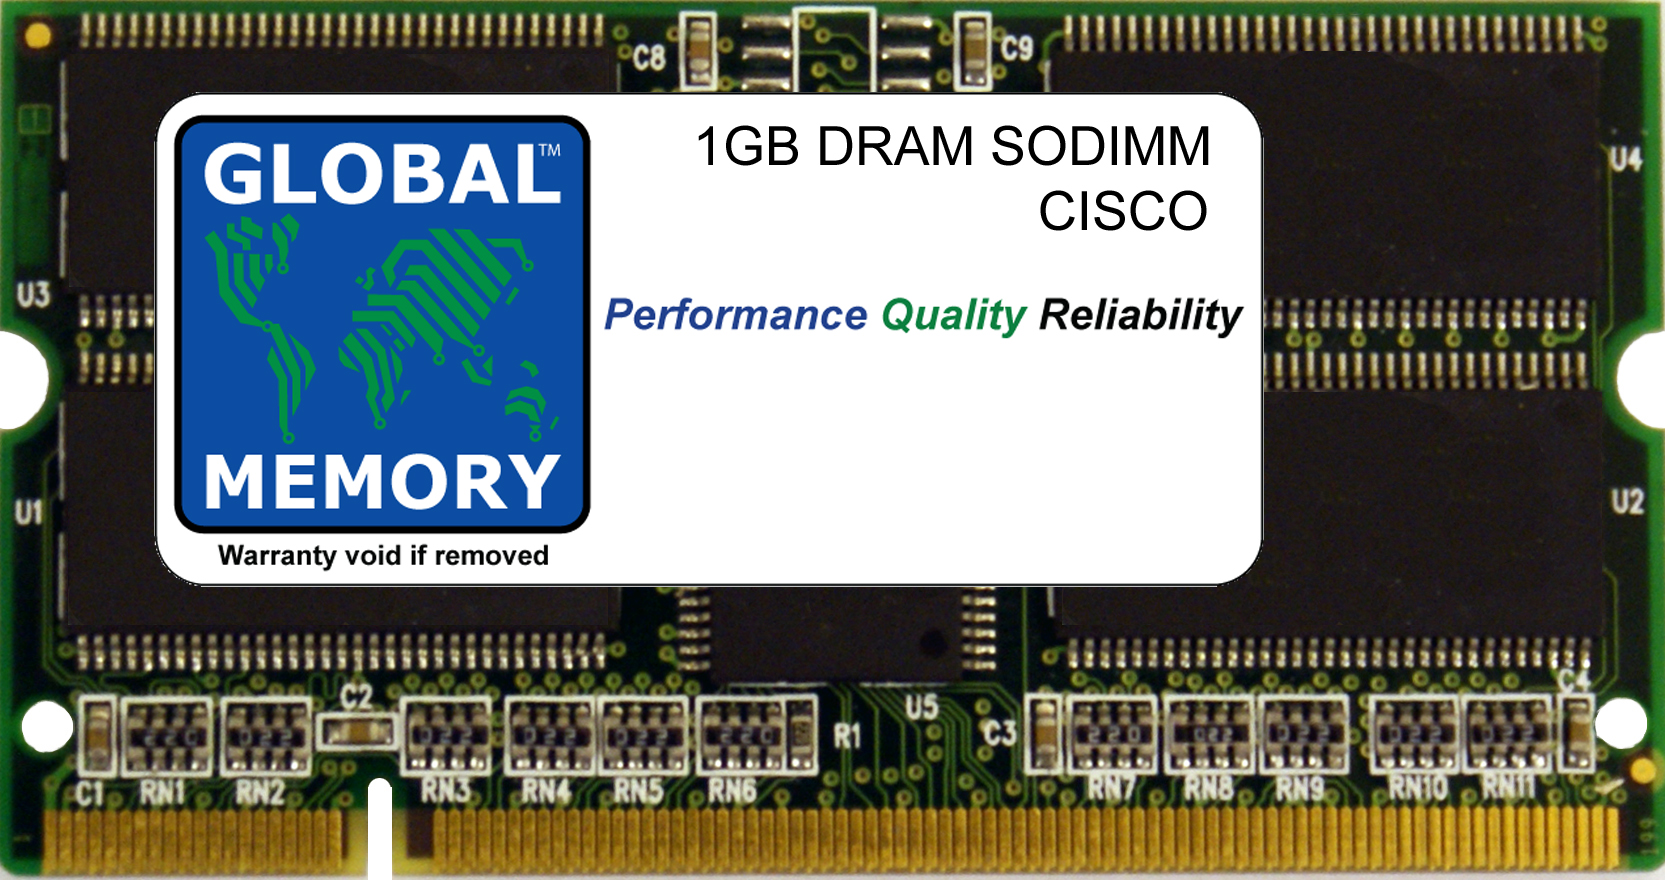 1GB DRAM SODIMM MEMORY RAM FOR CISCO 7600 SERIES ROUTERS SUPERVISOR ENGINE & ROUTE SWITCH PROCESSOR (MEM-SIP-200-1G) - Click Image to Close